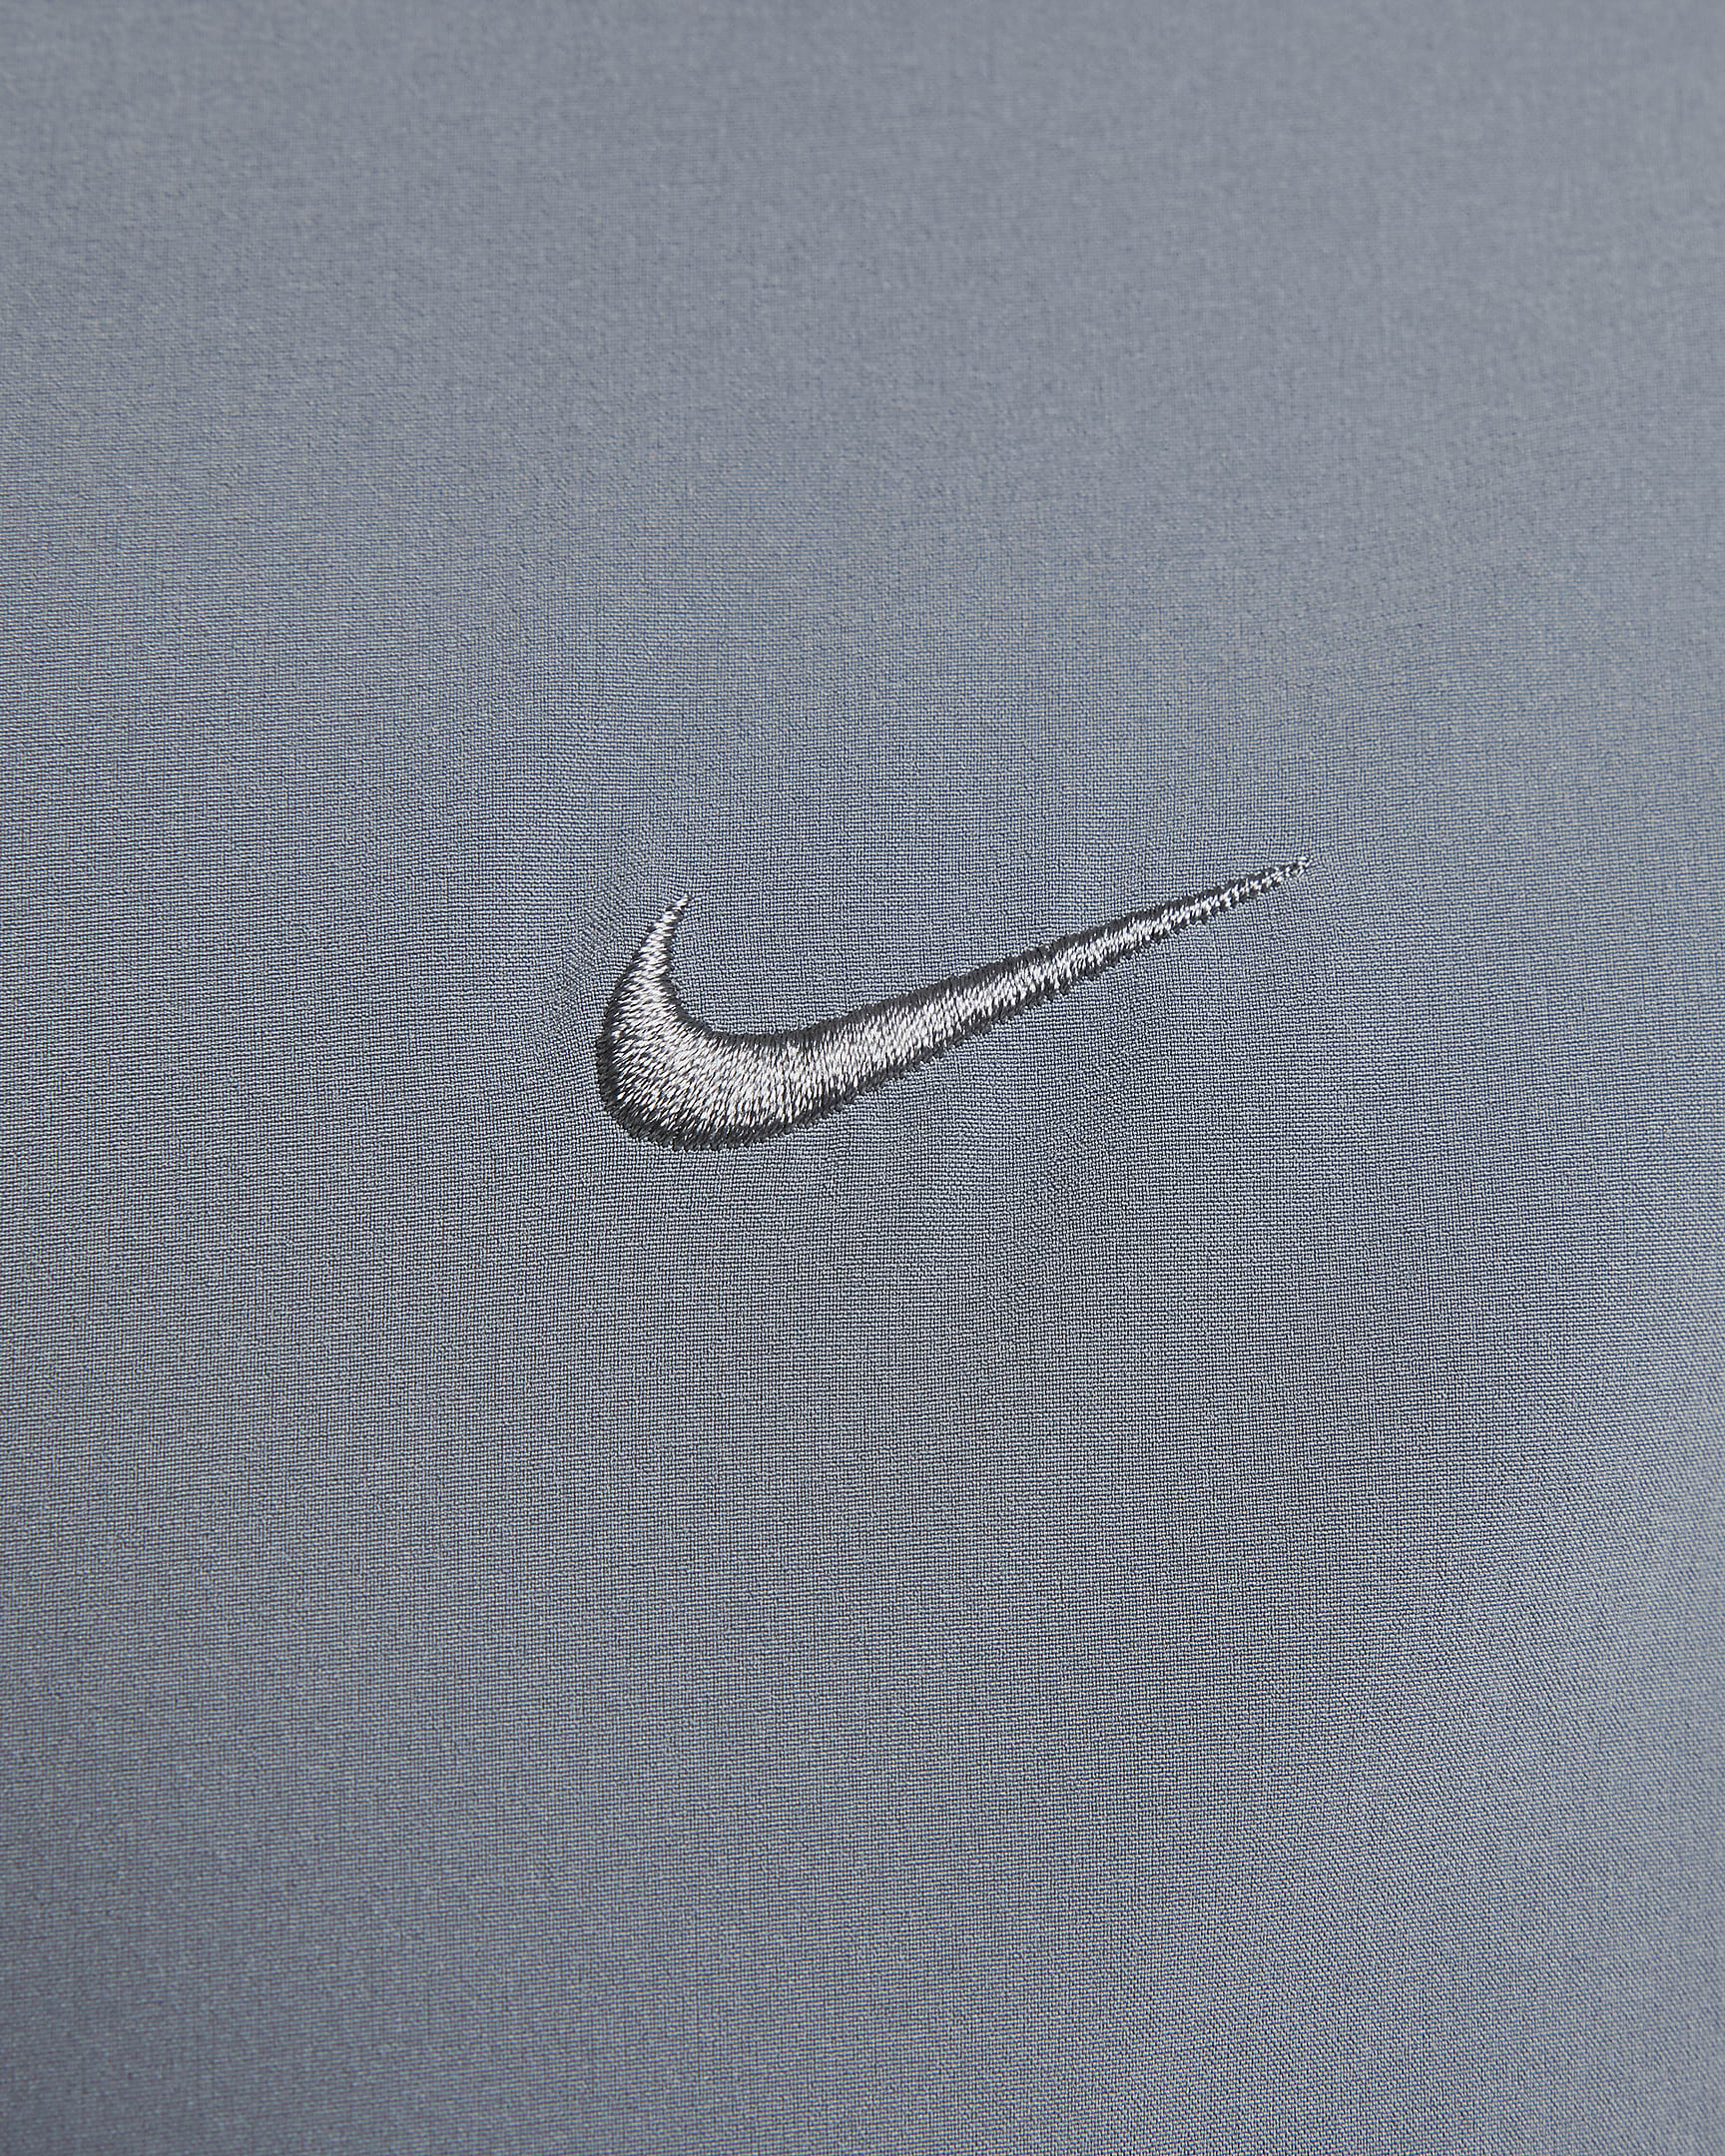 Nike Unlimited Men's Water-Repellent Hooded Versatile Jacket - Smoke Grey/Black/Smoke Grey